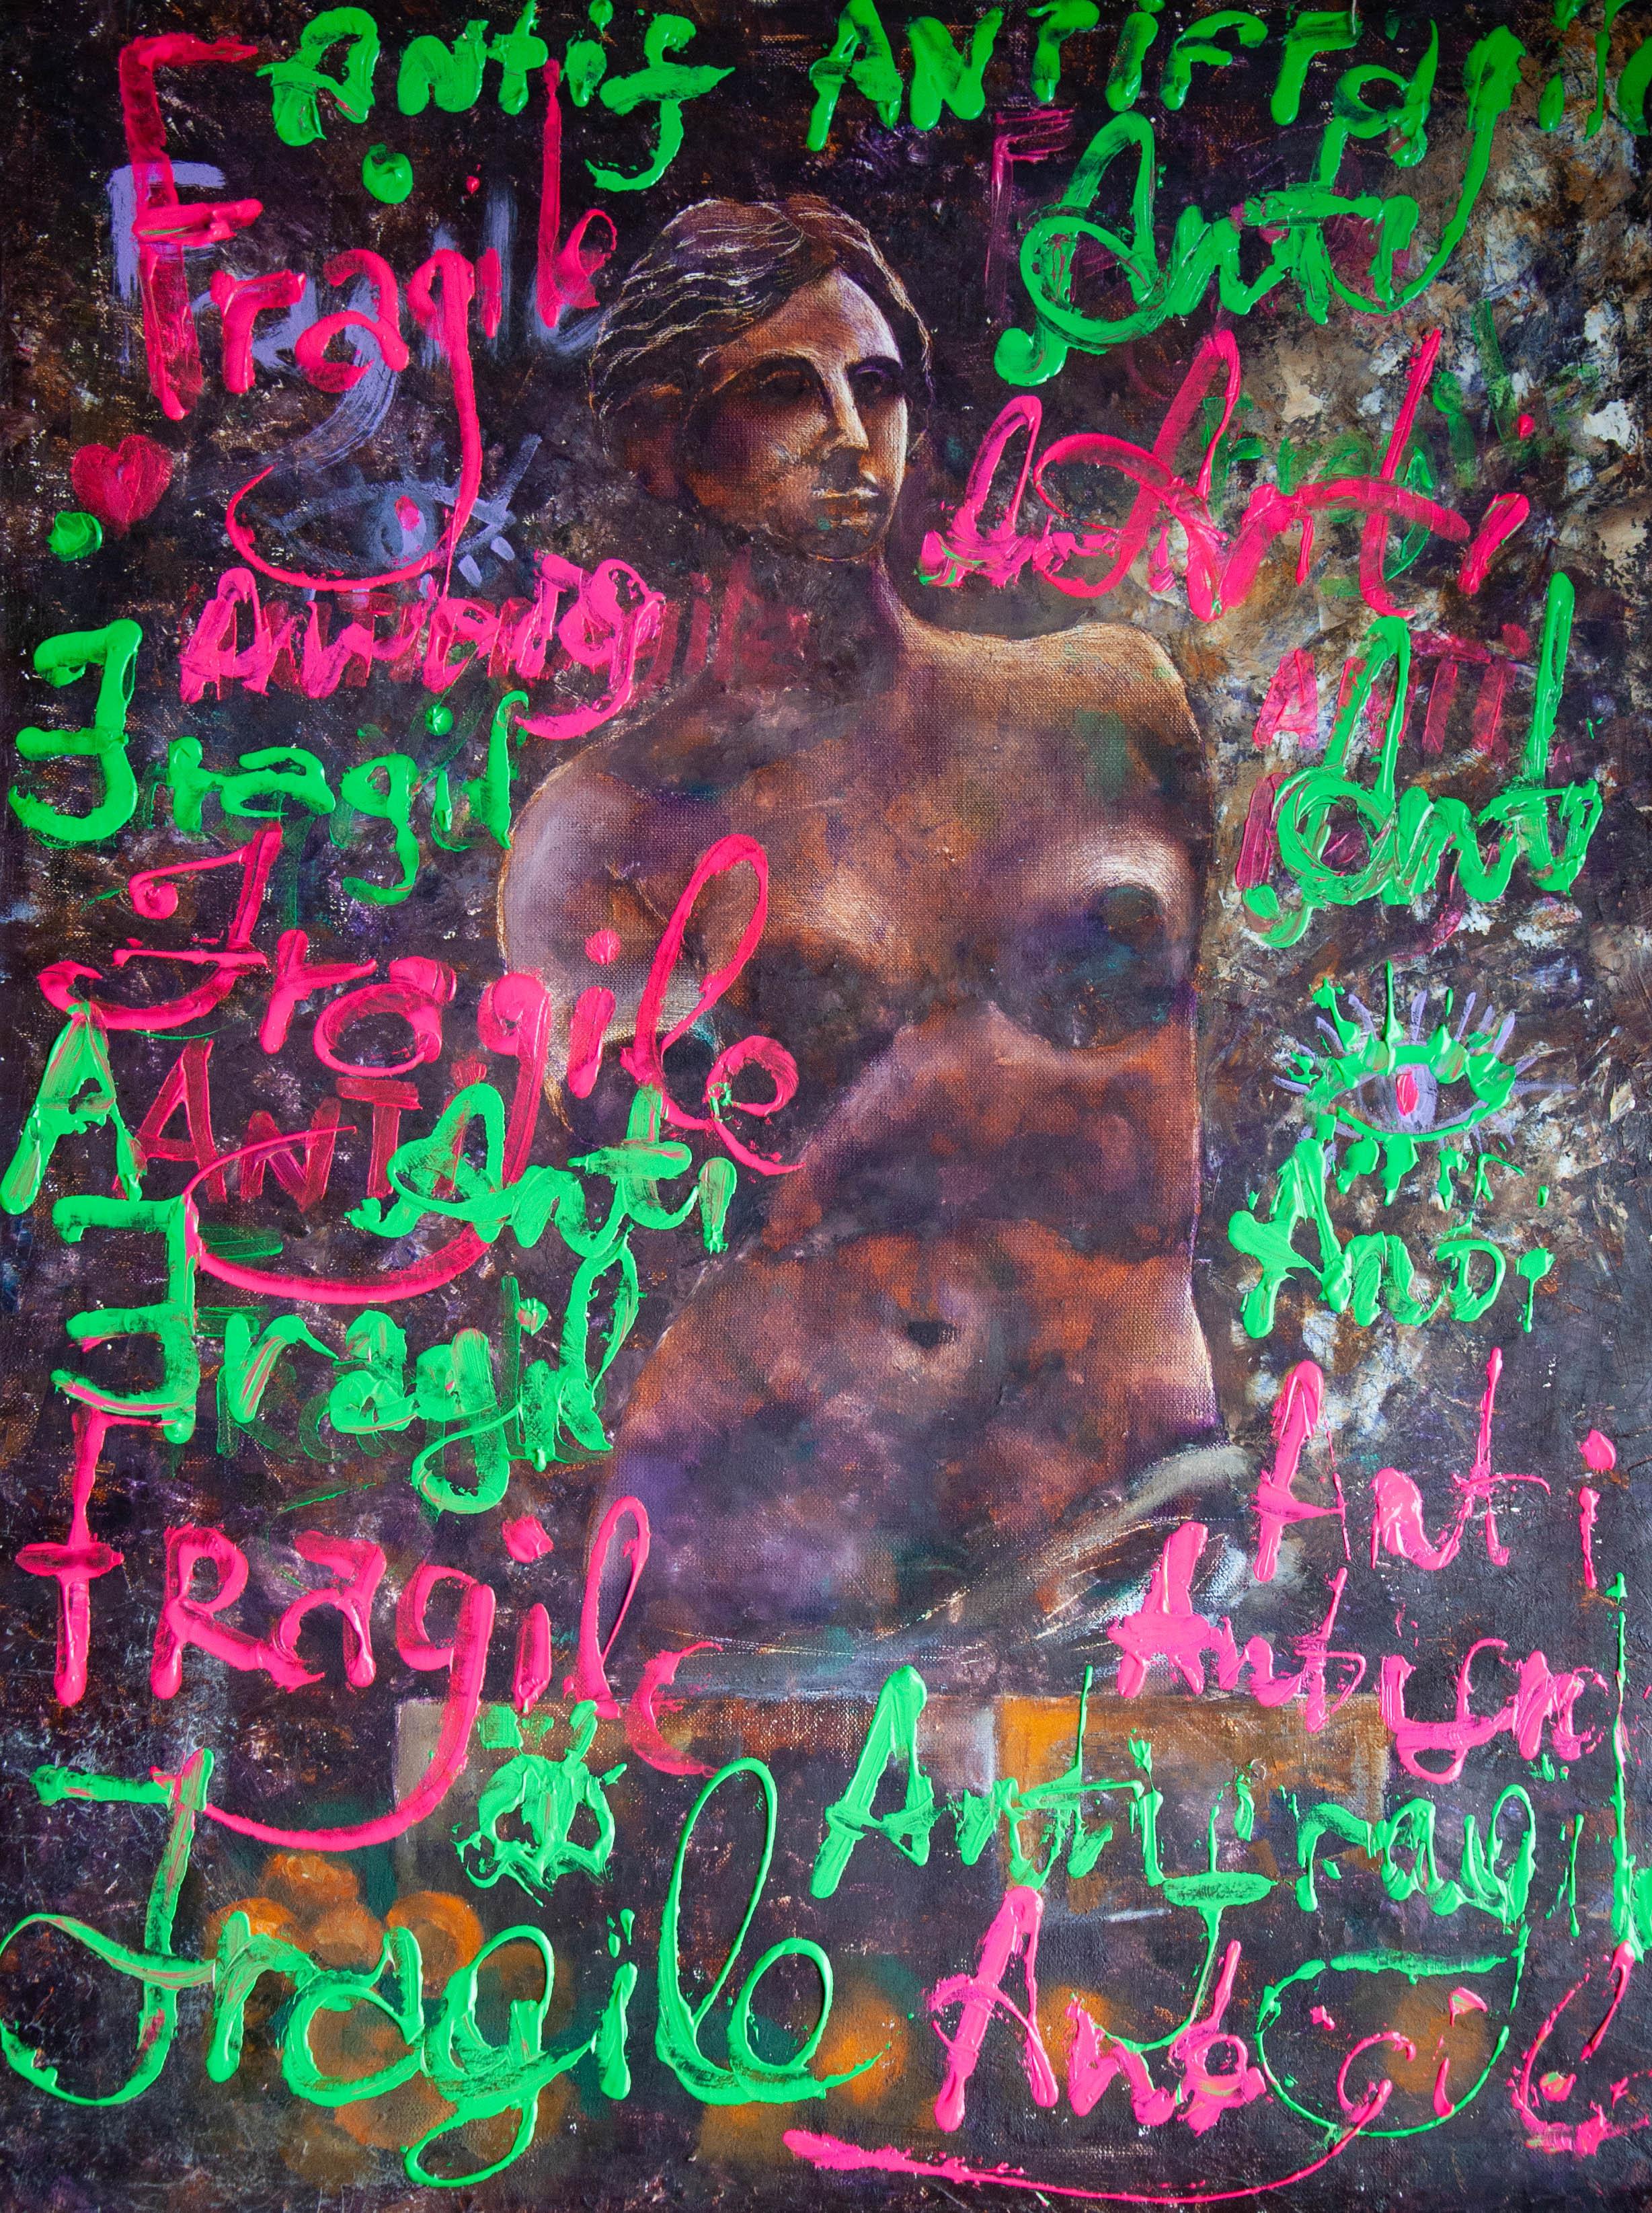 Dasha Pogodina Nude Painting - Pop Art Painting, Modern Mixed Media Artwork - ANTIFRAGILE - 24x32in (80*60cm)